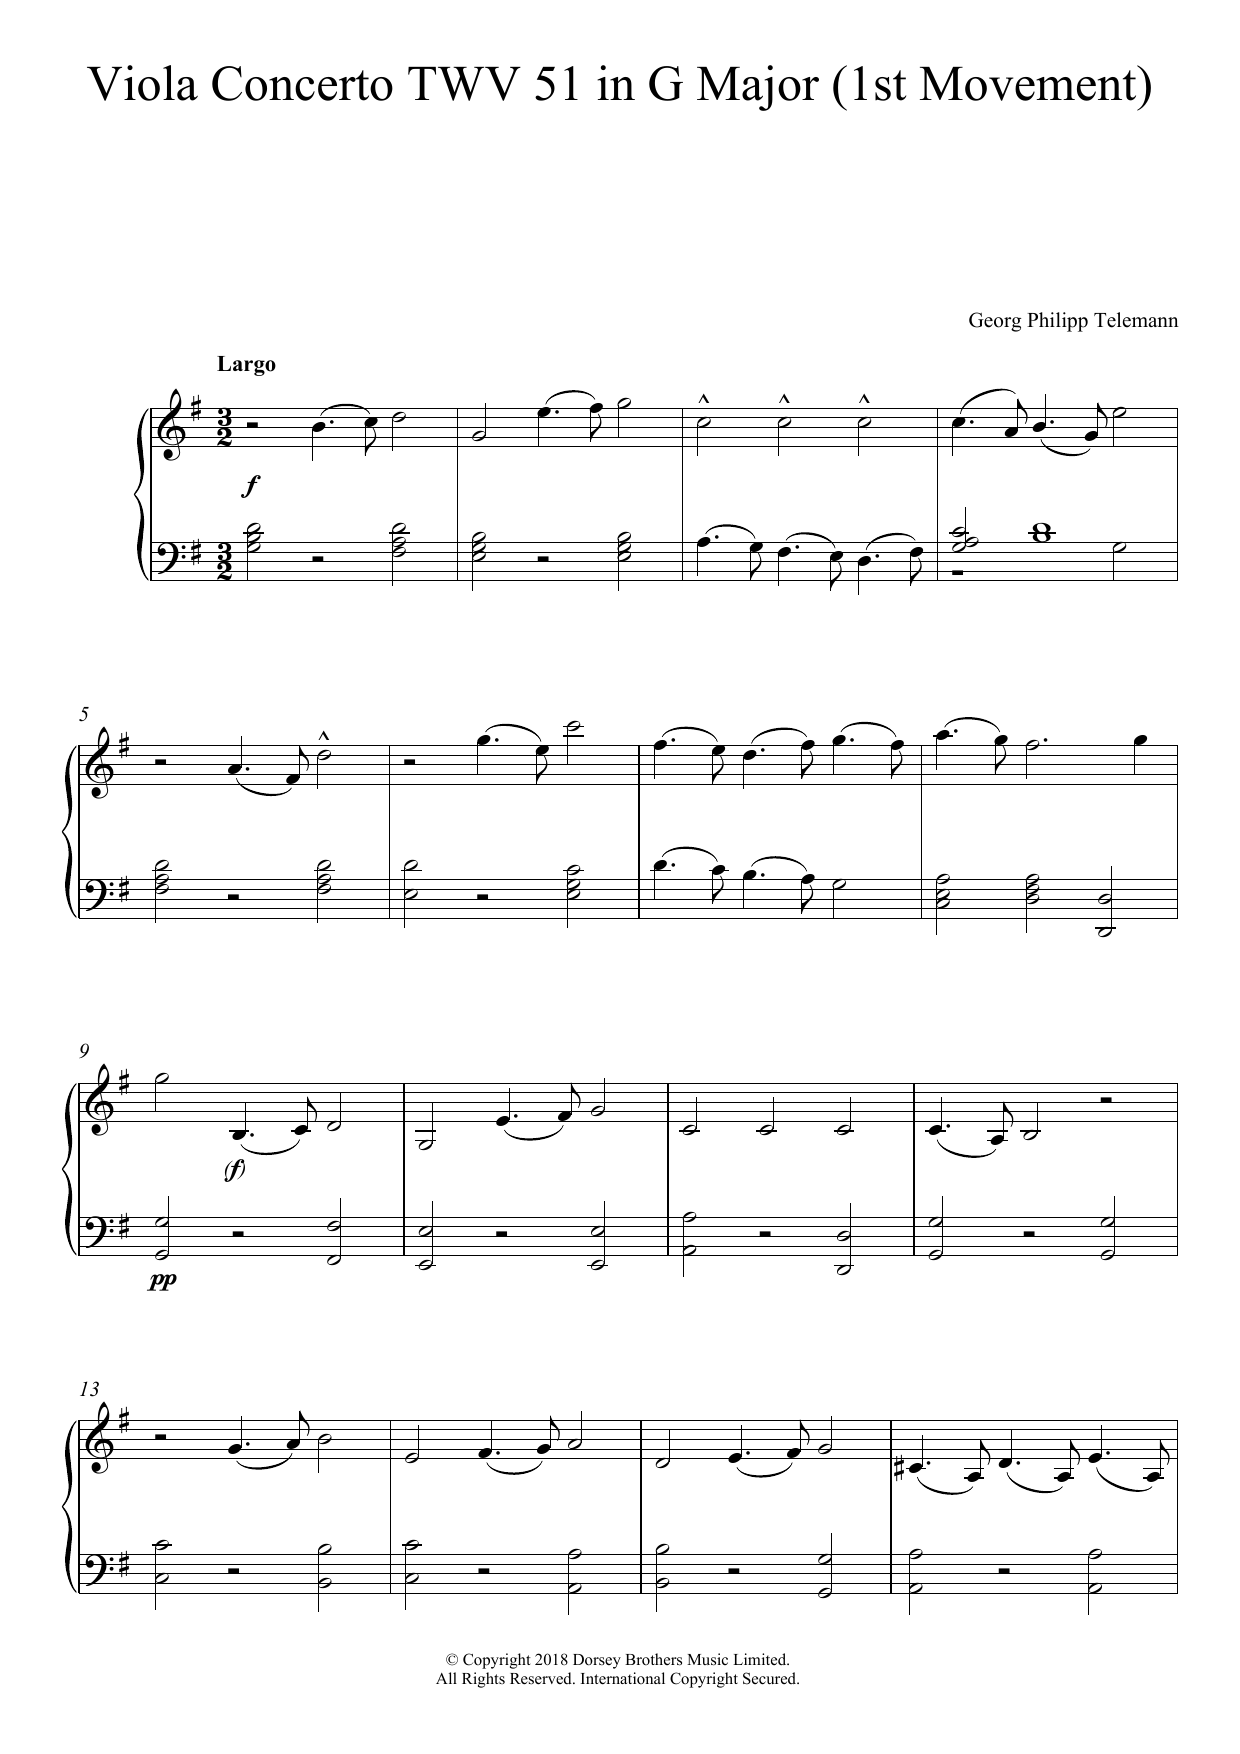 Download Georg Philipp Telemann Viola Concerto TWV 51 In G Major Sheet Music